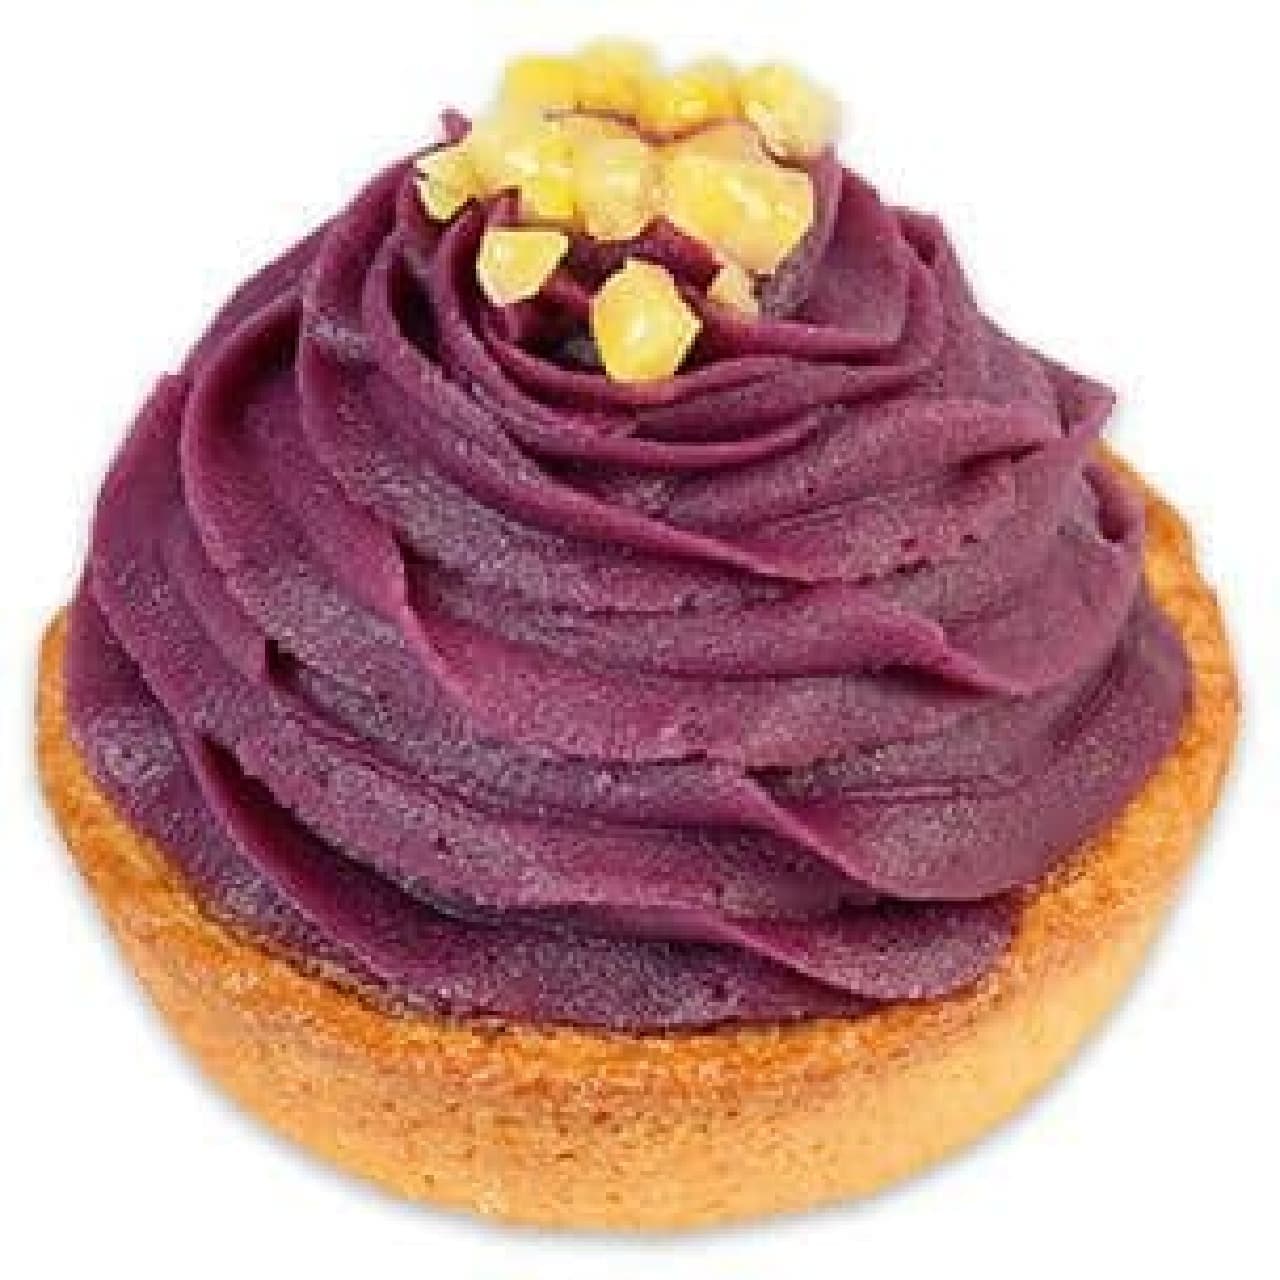 Fujiya pastry shop "Aya purple potato tart from Kagoshima prefecture"